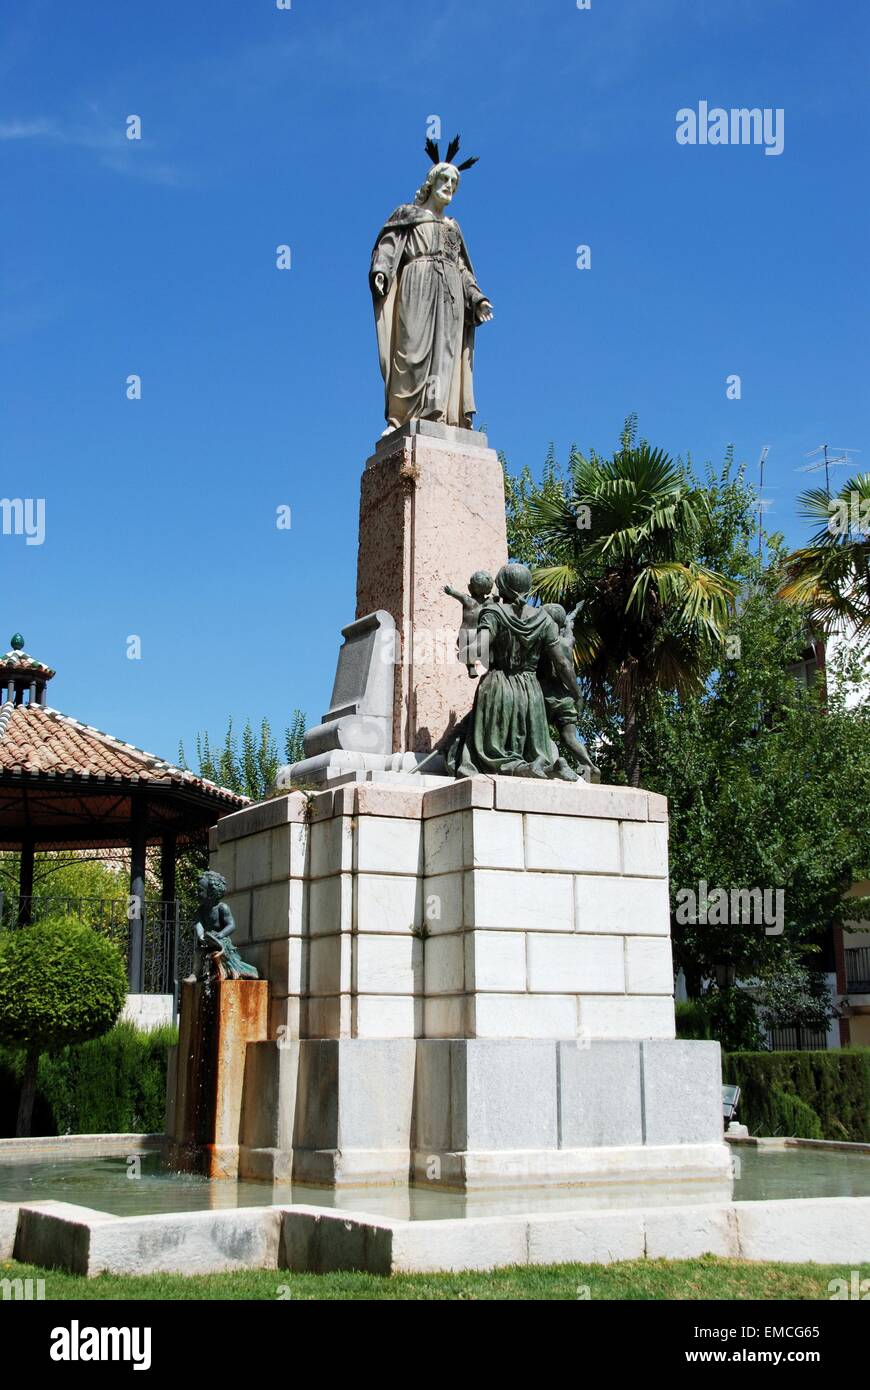 Religious monument in gardens in the town centre, Priego de Cordoba, Cordoba Province, Andalusia, Spain, Western Europe. Stock Photo